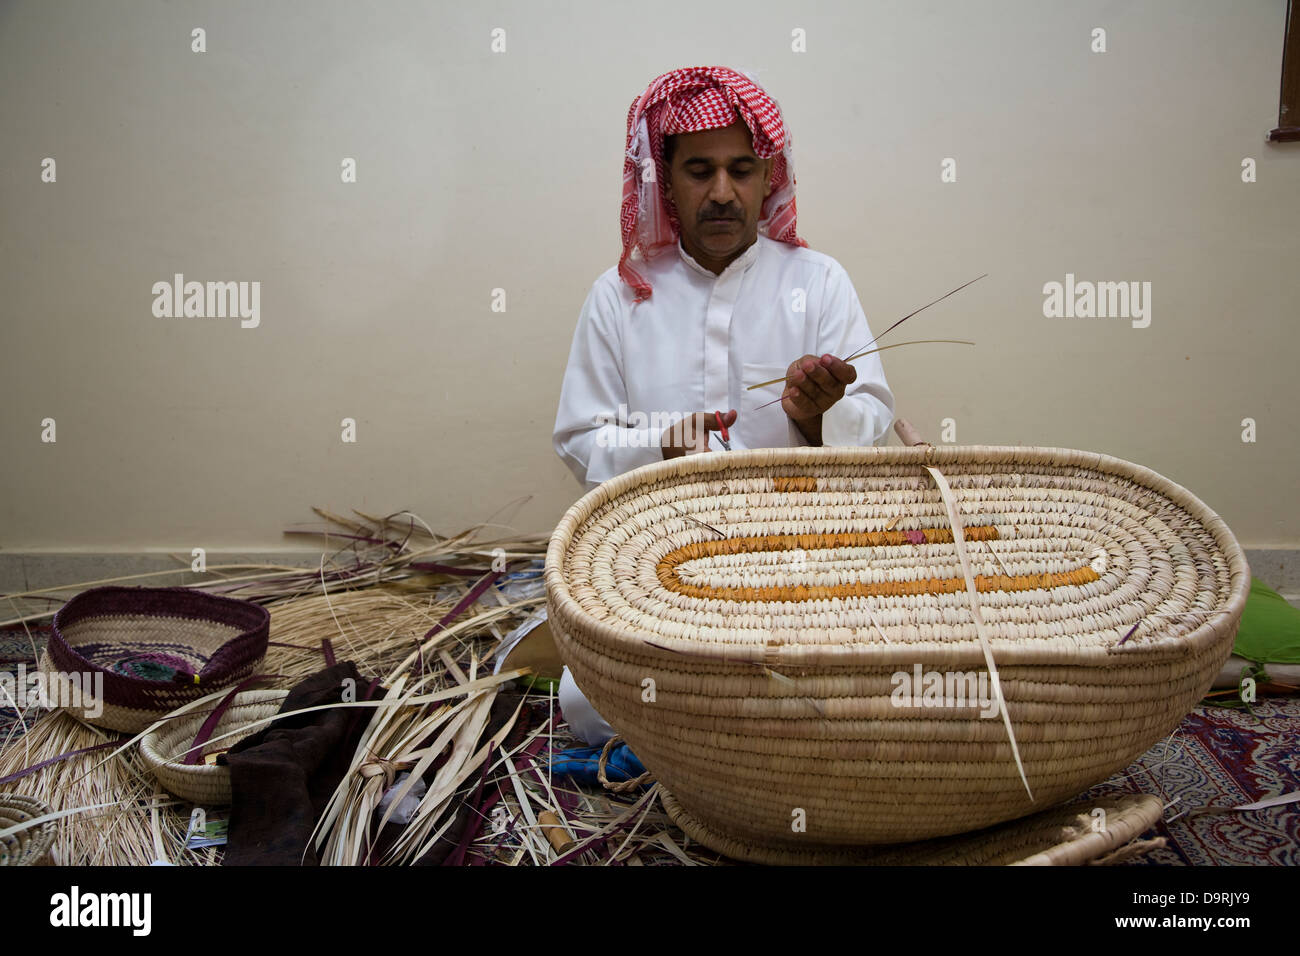 A basket maker demonstrates his skills at the government sponsored Al-Jasara Handicraft Centre in Manama, Bahrain. Stock Photo